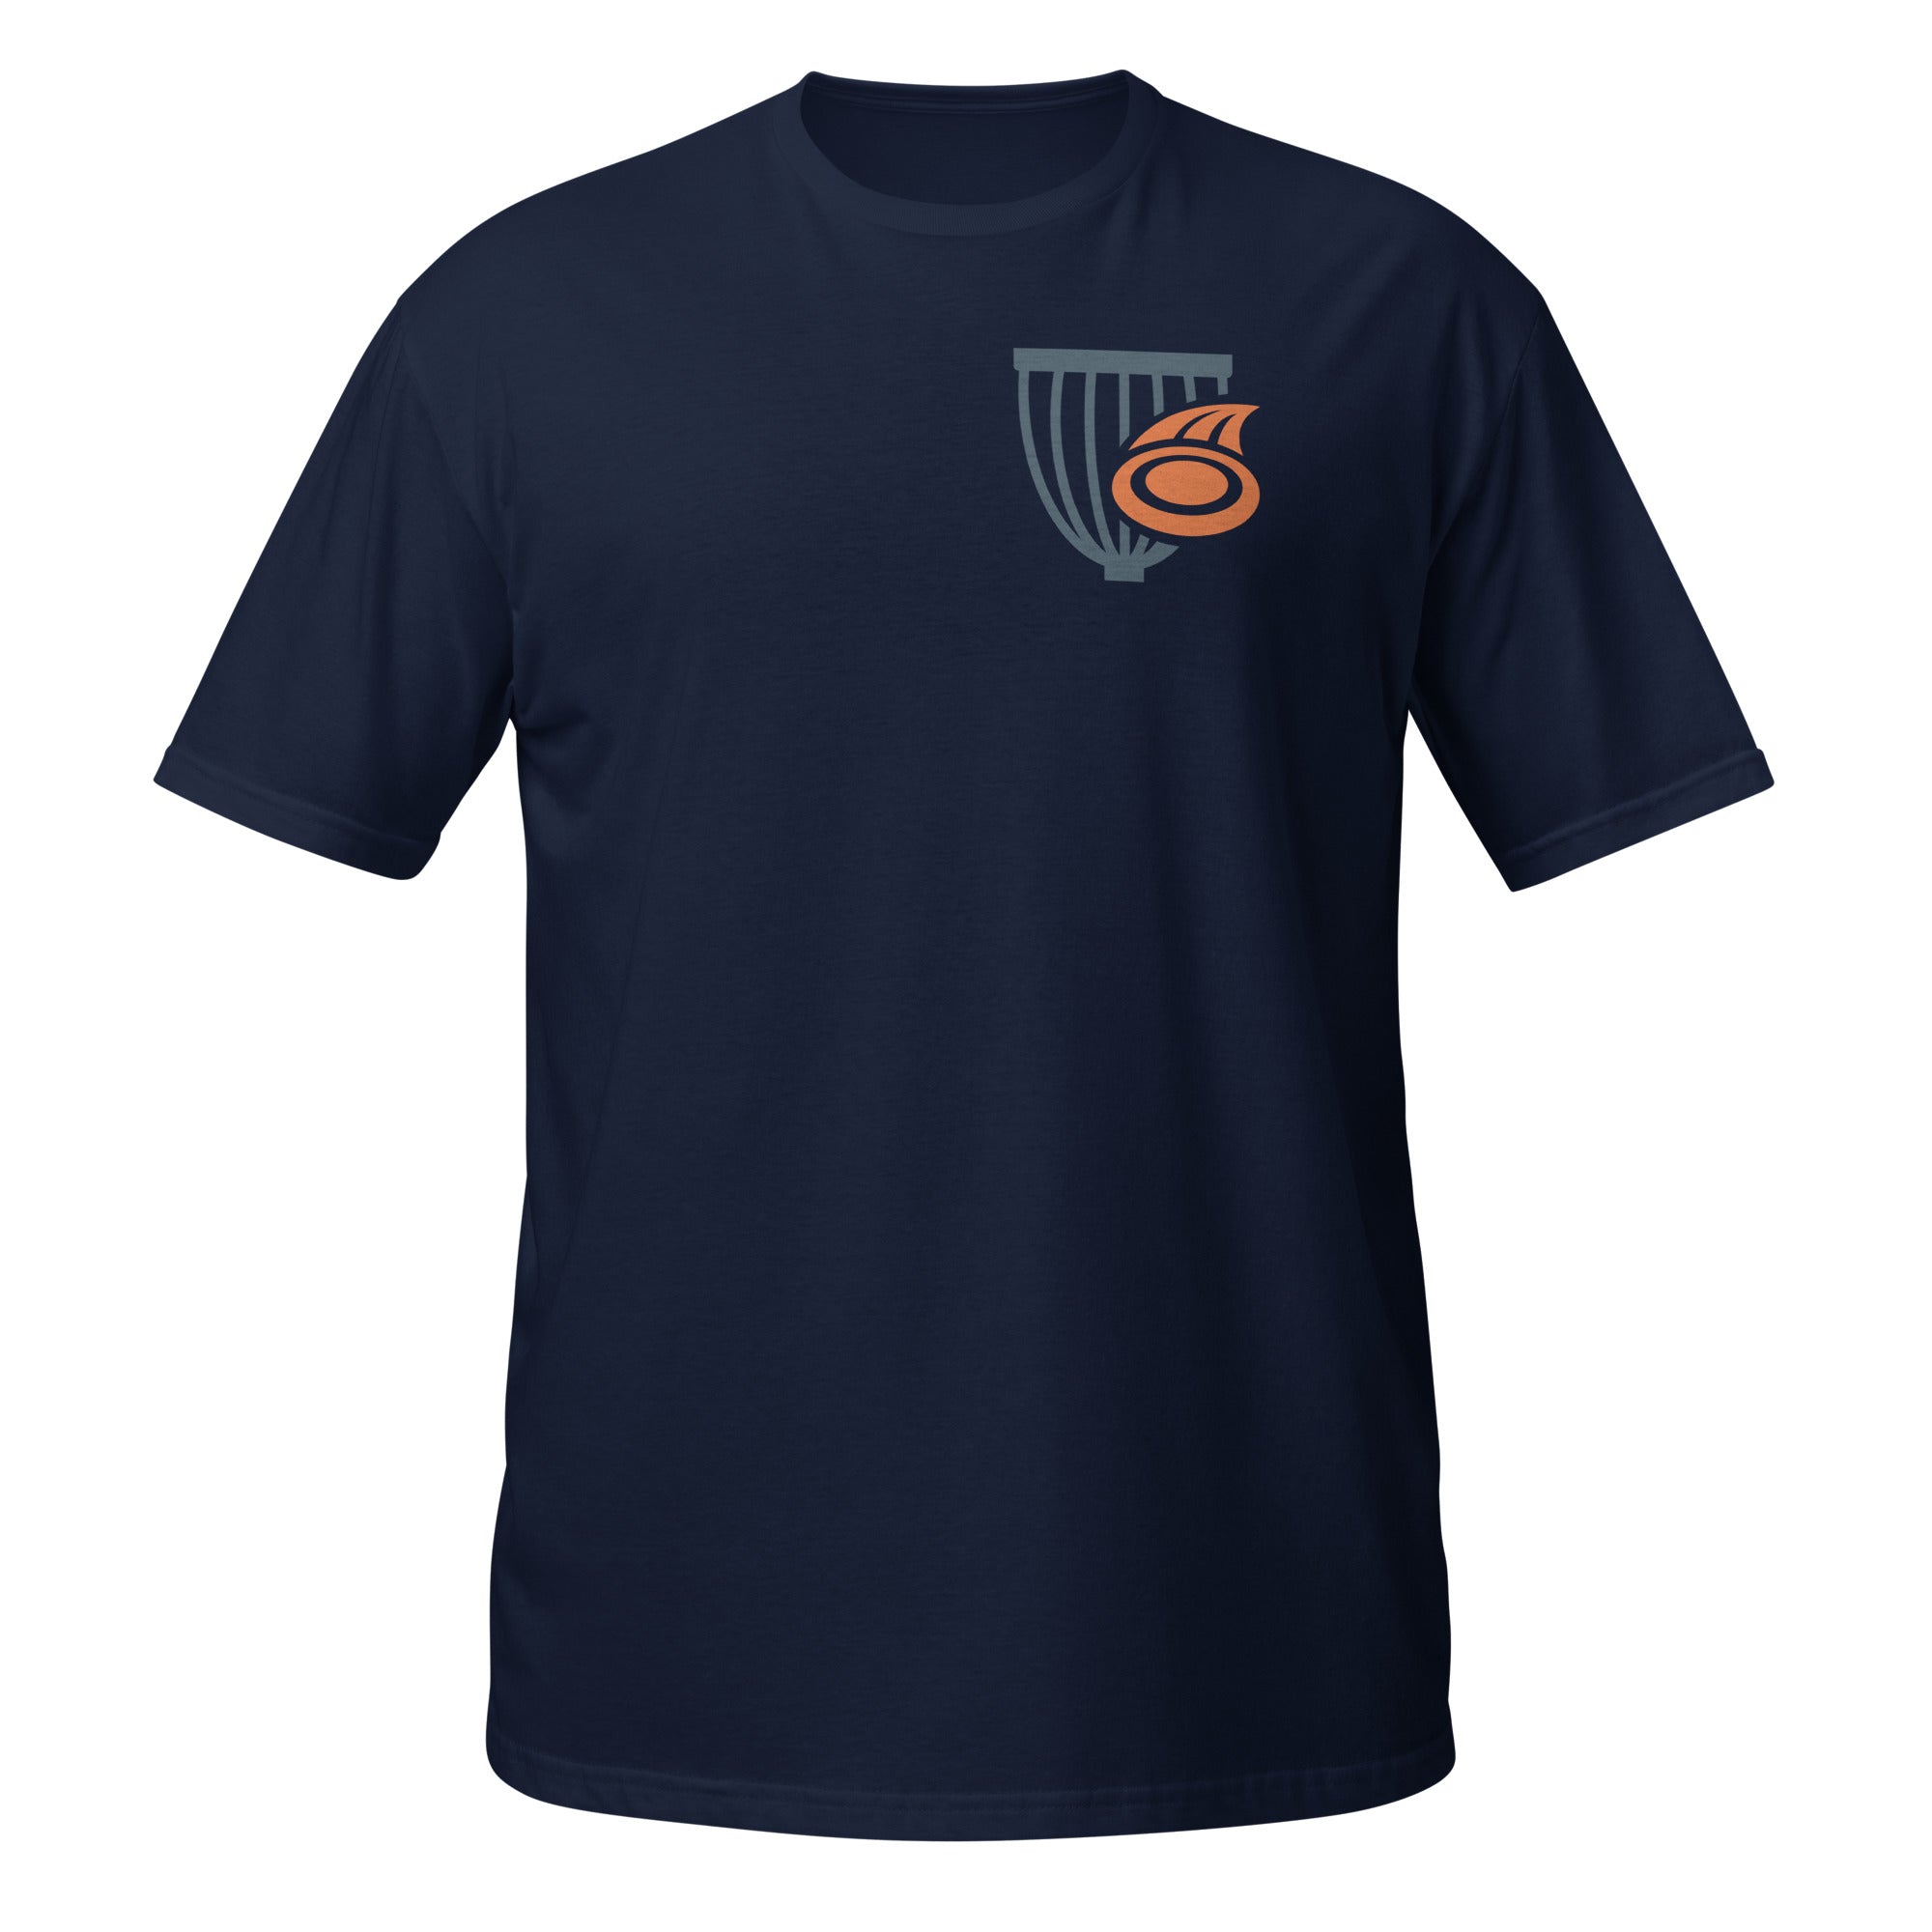 Buy navy The Disc Depot Short-Sleeve Unisex T-Shirt